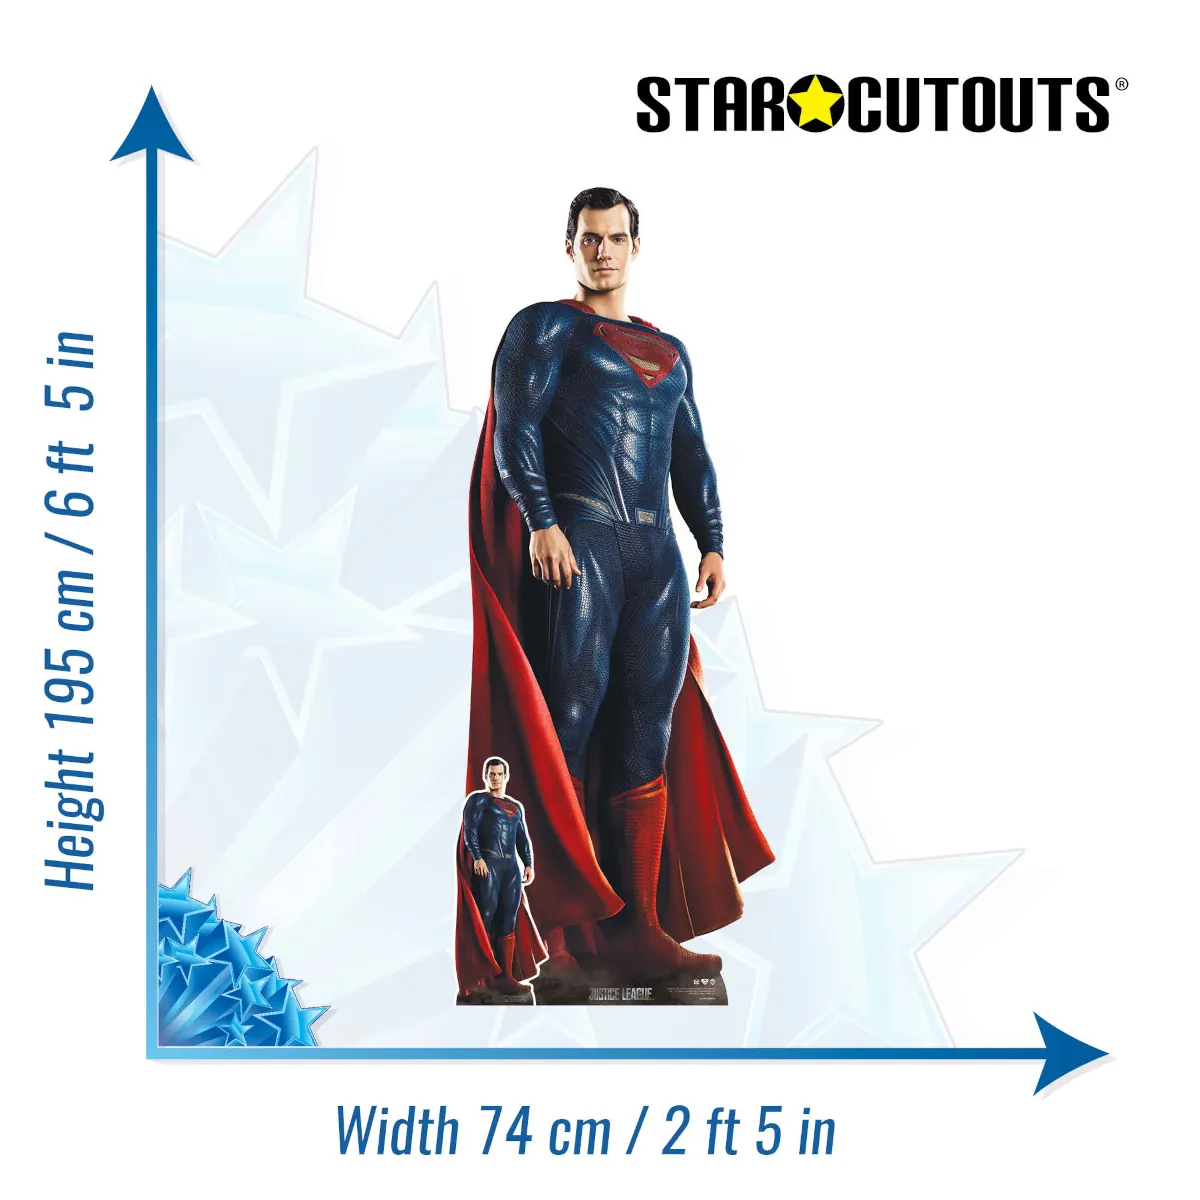 SC4189 Superman 'Justice League' (Henry Cavill) Official Lifesize + Mini Cardboard Cutout Standee Size